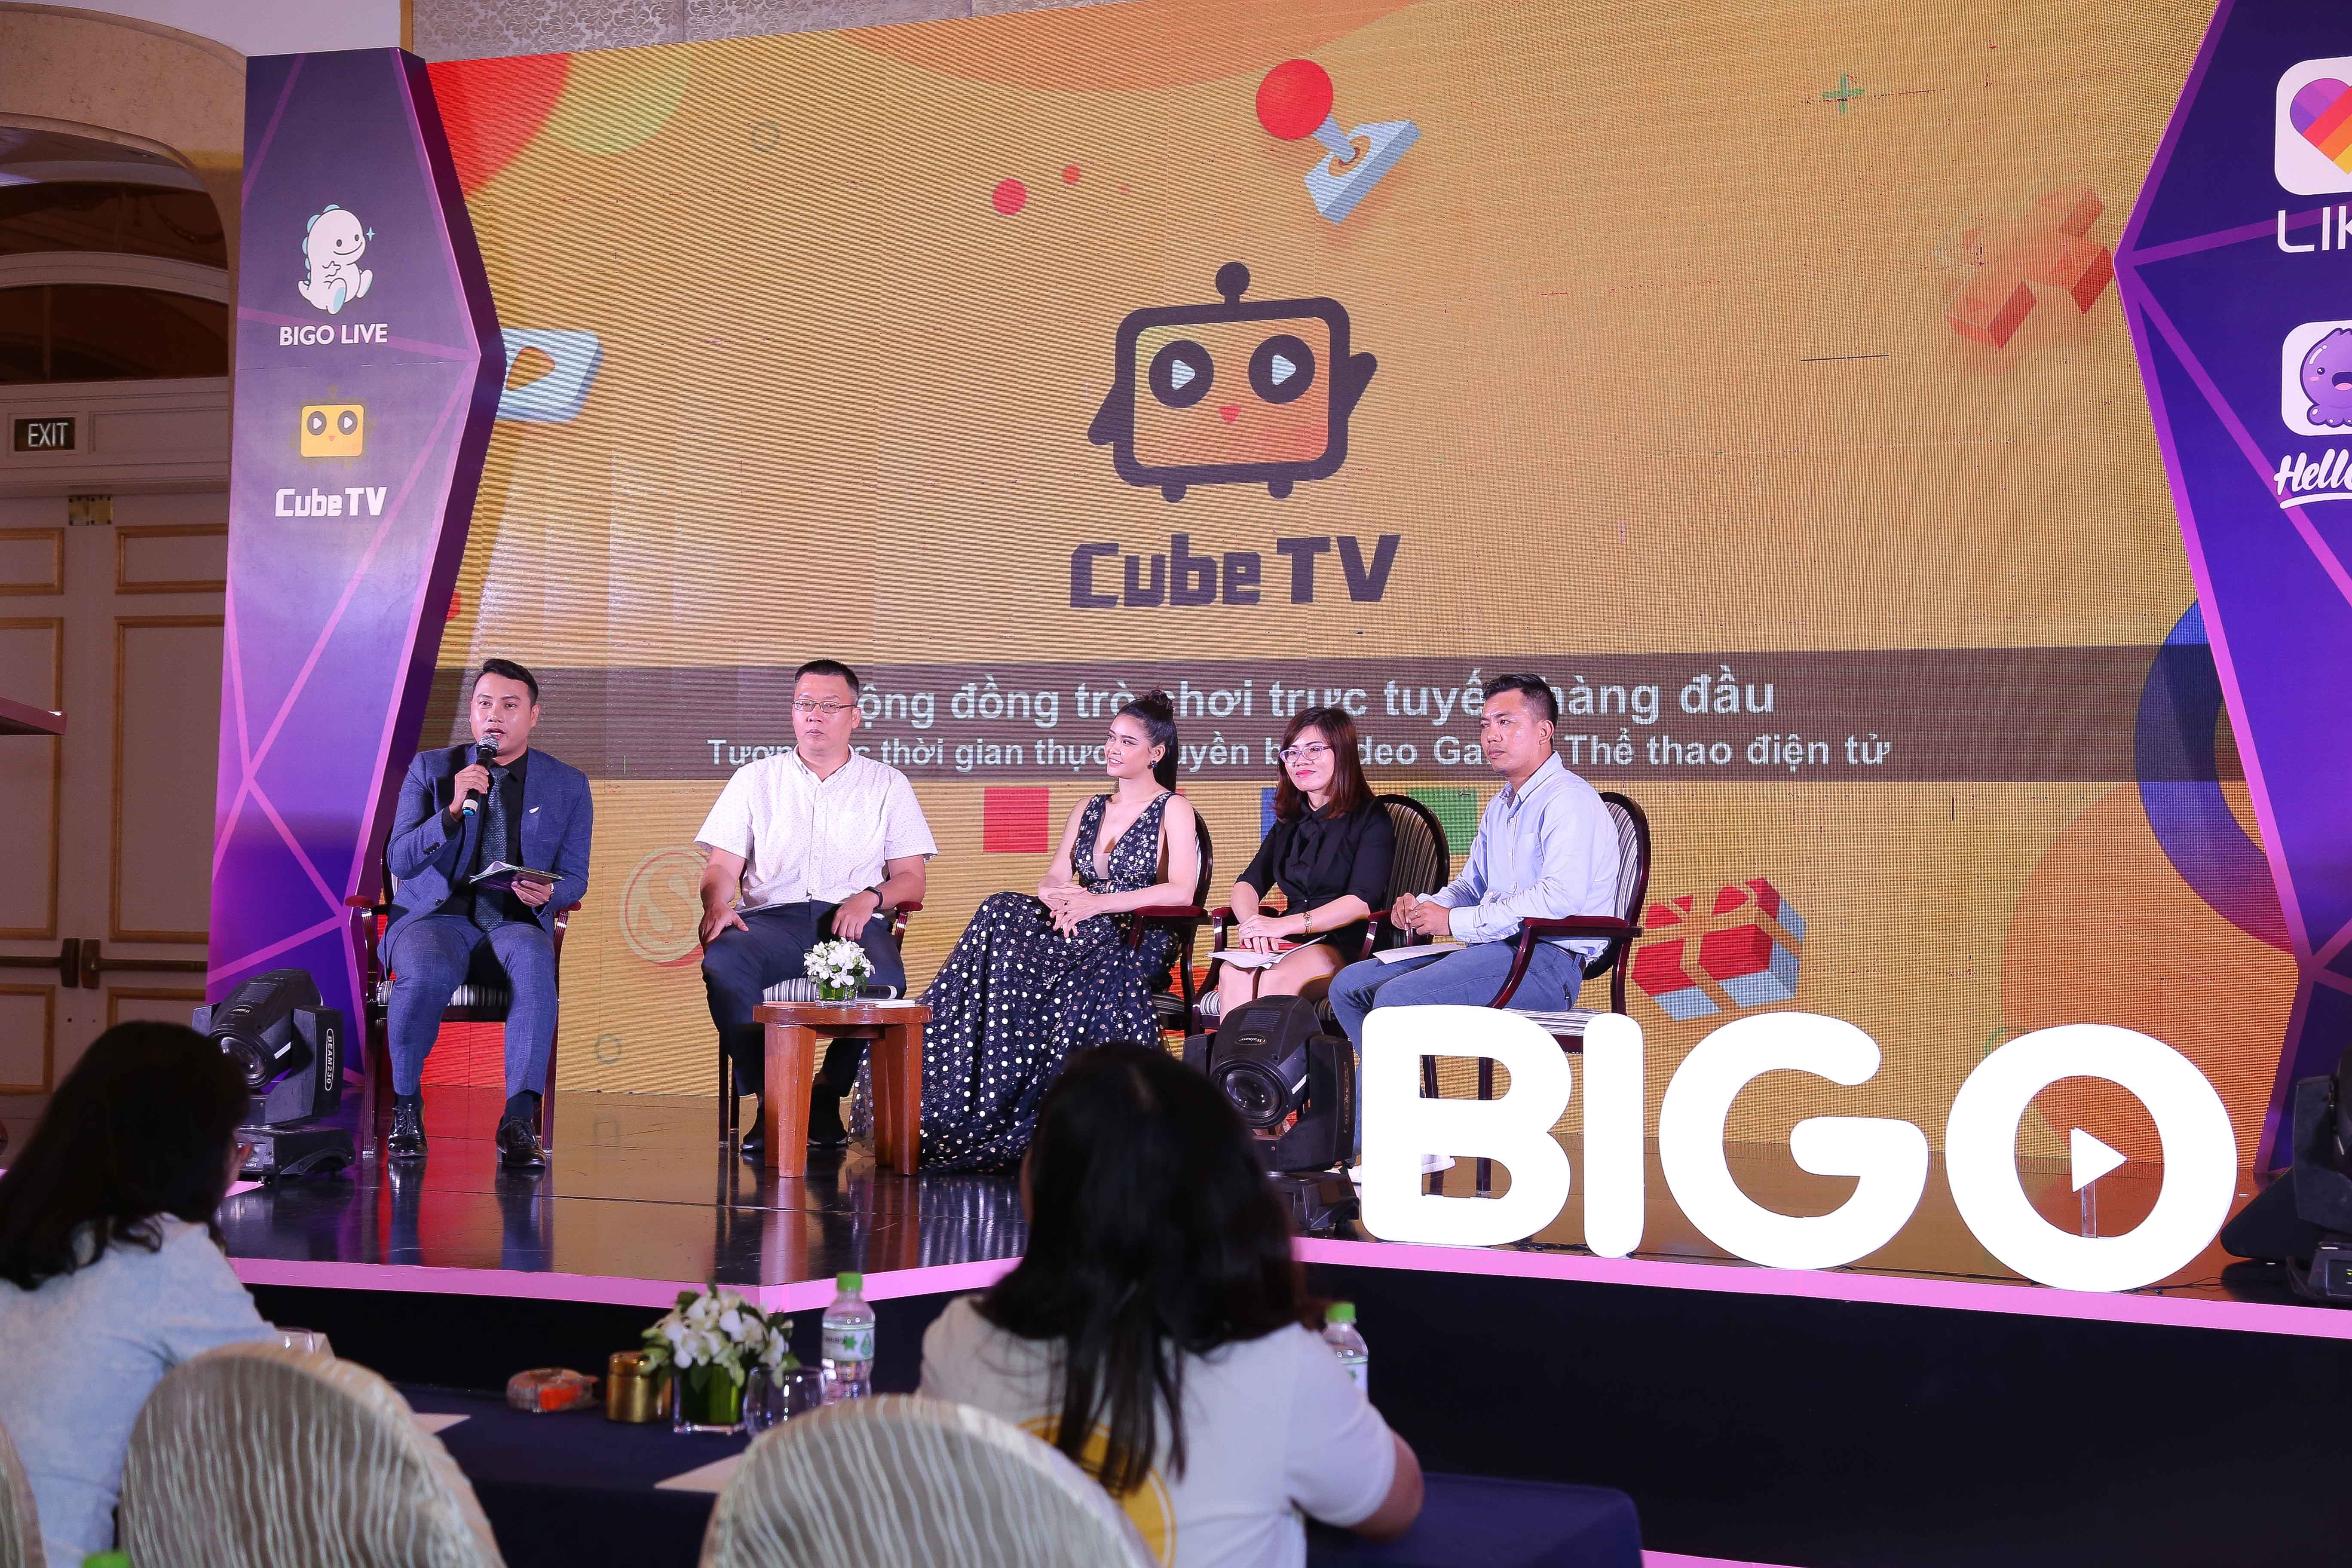 Bigo Live kỷ niệm 6 năm tại Việt Nam - VnExpress Kinh doanh